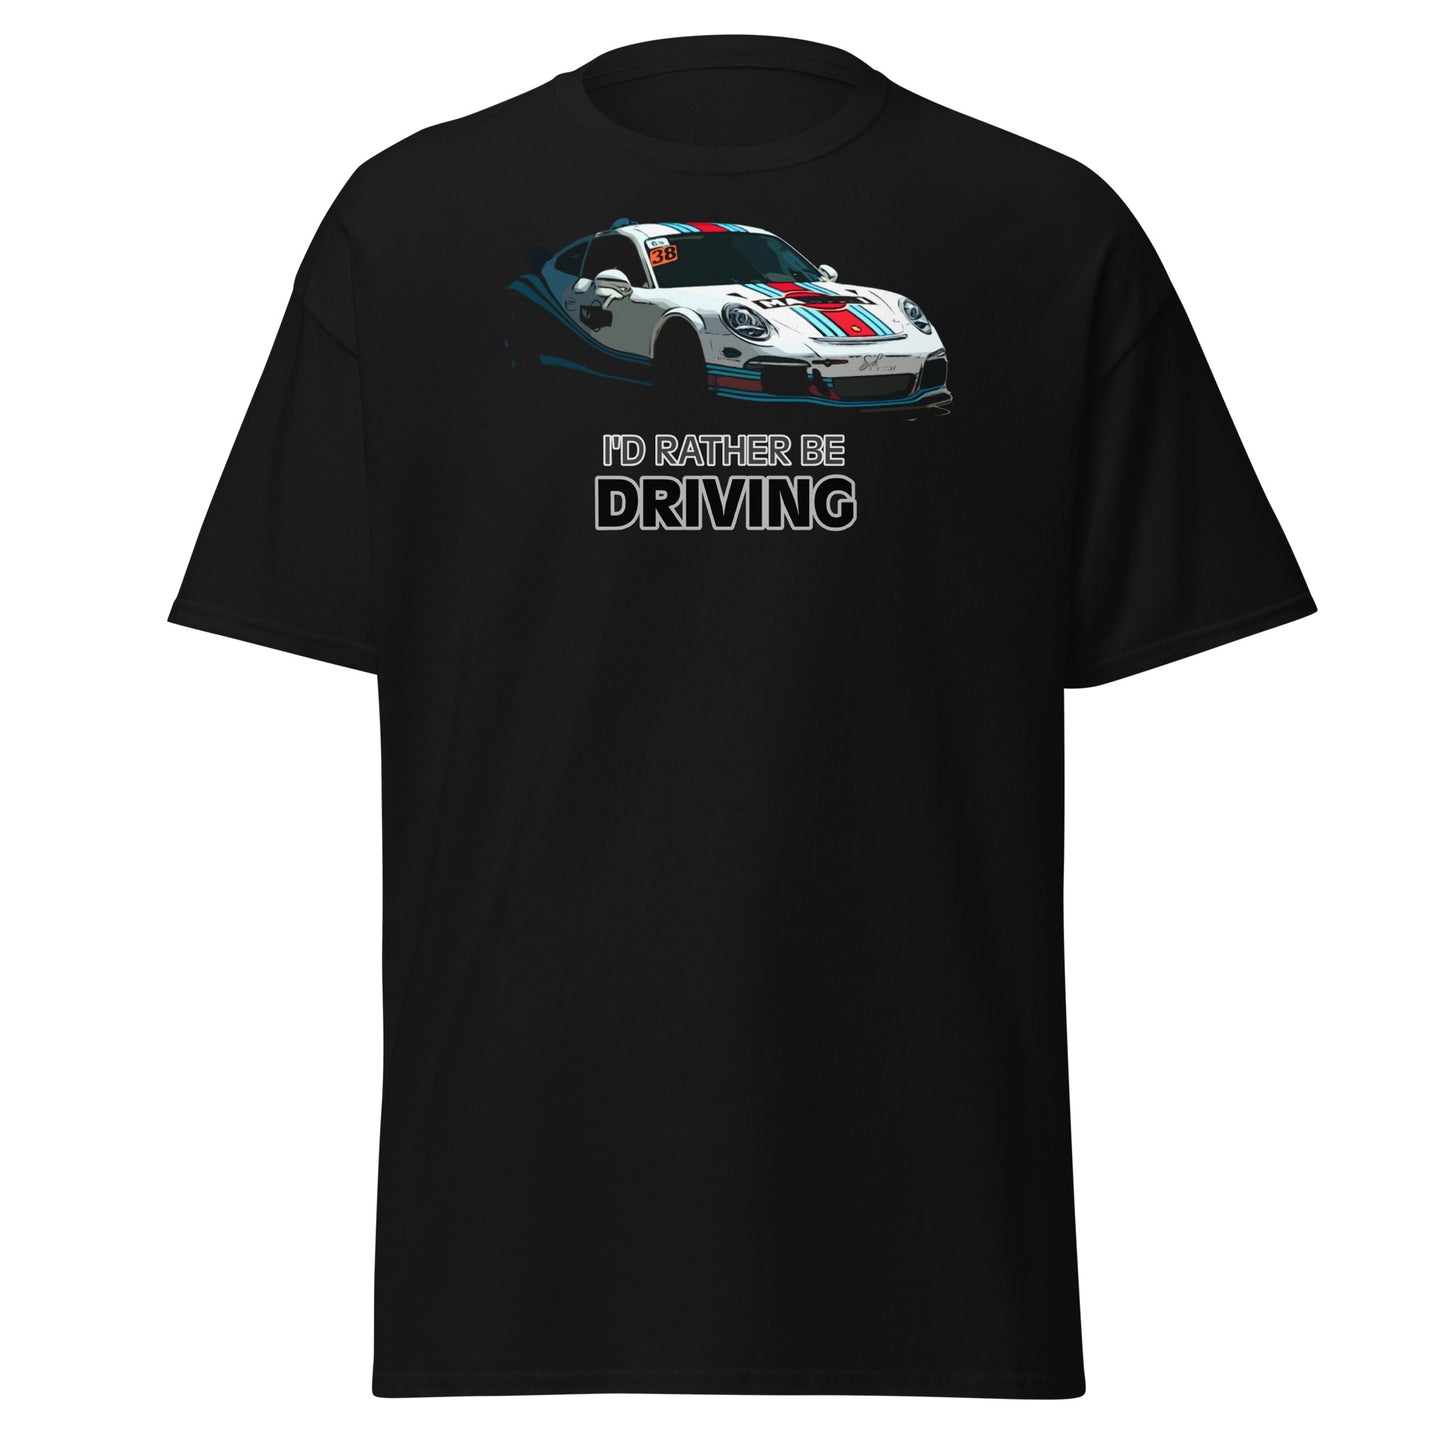 I'd rather be driving a Porsche t-shirt in black